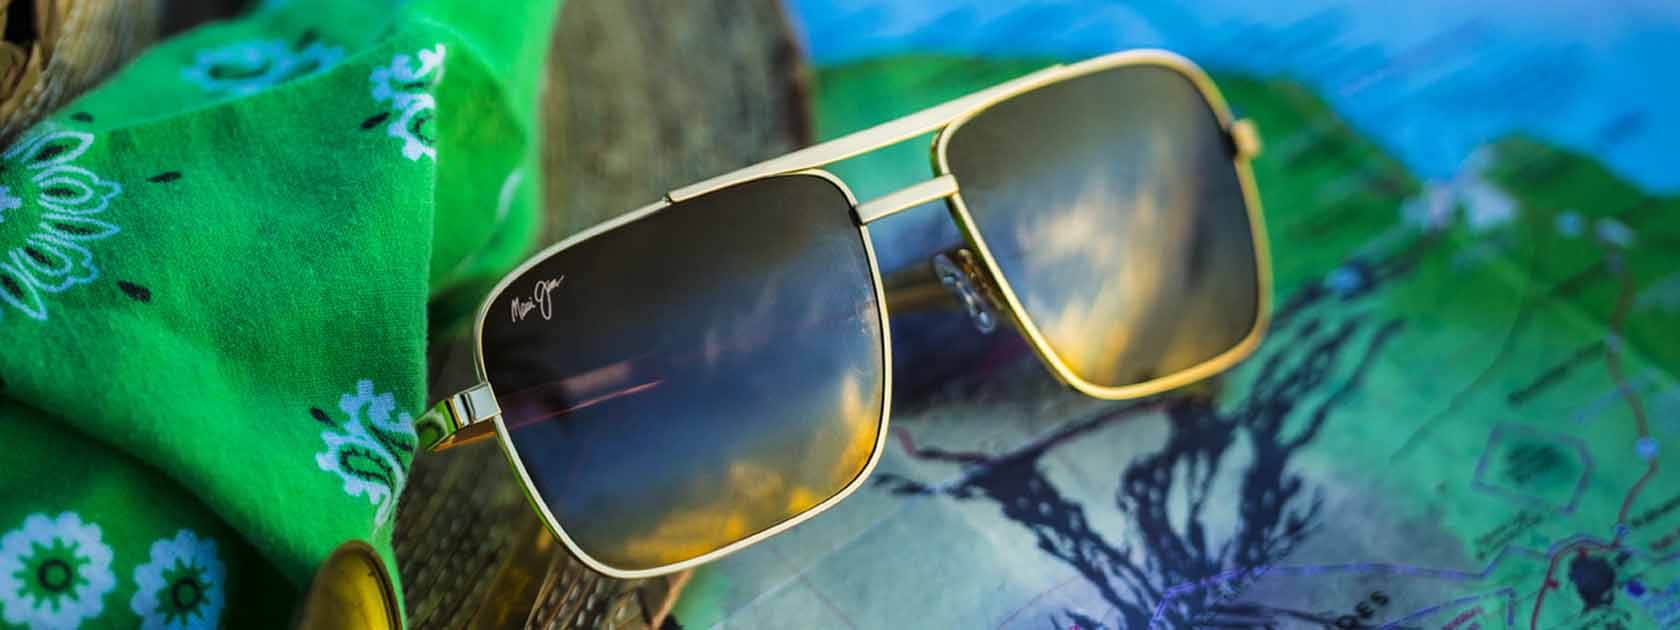 gafas de sol de aviador de montura dorada con lentes bronce expuestas sobre pañuelo verde